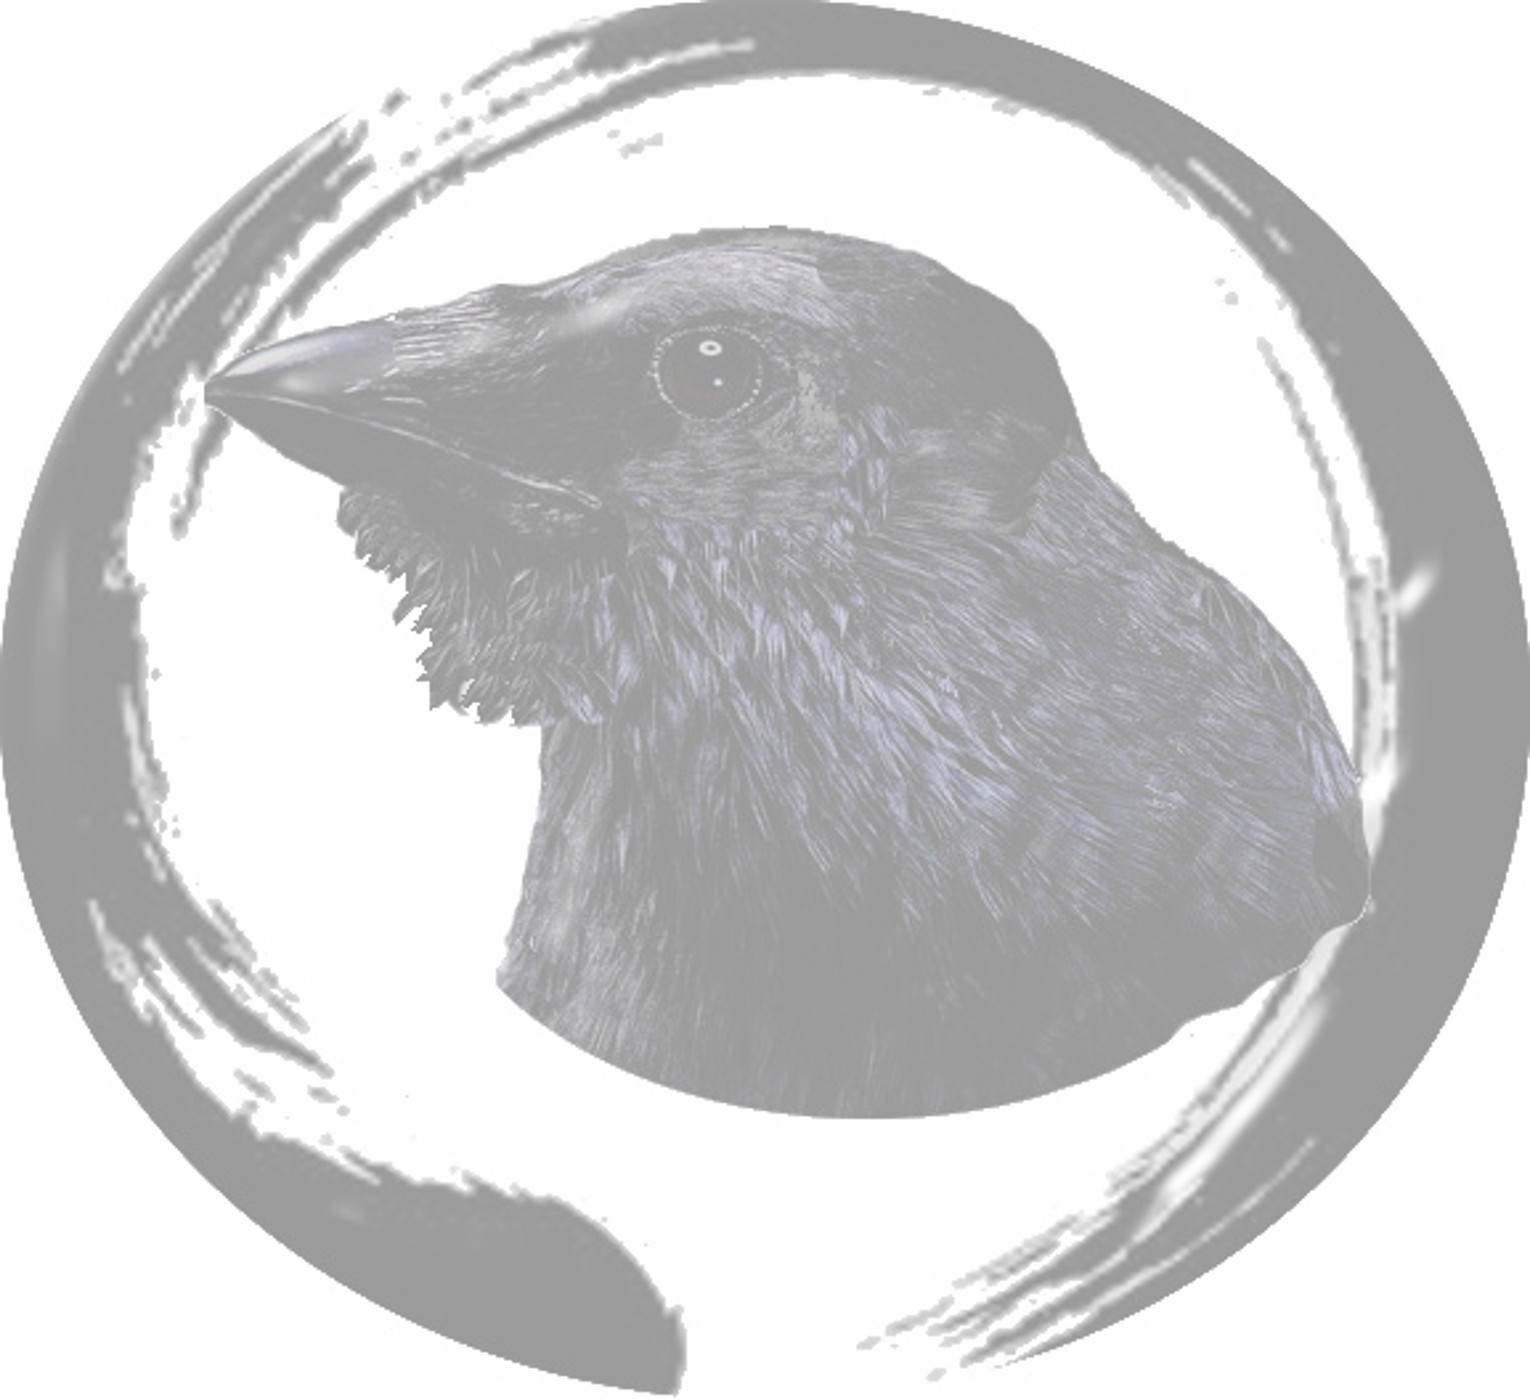 Bearded Crow pale logo